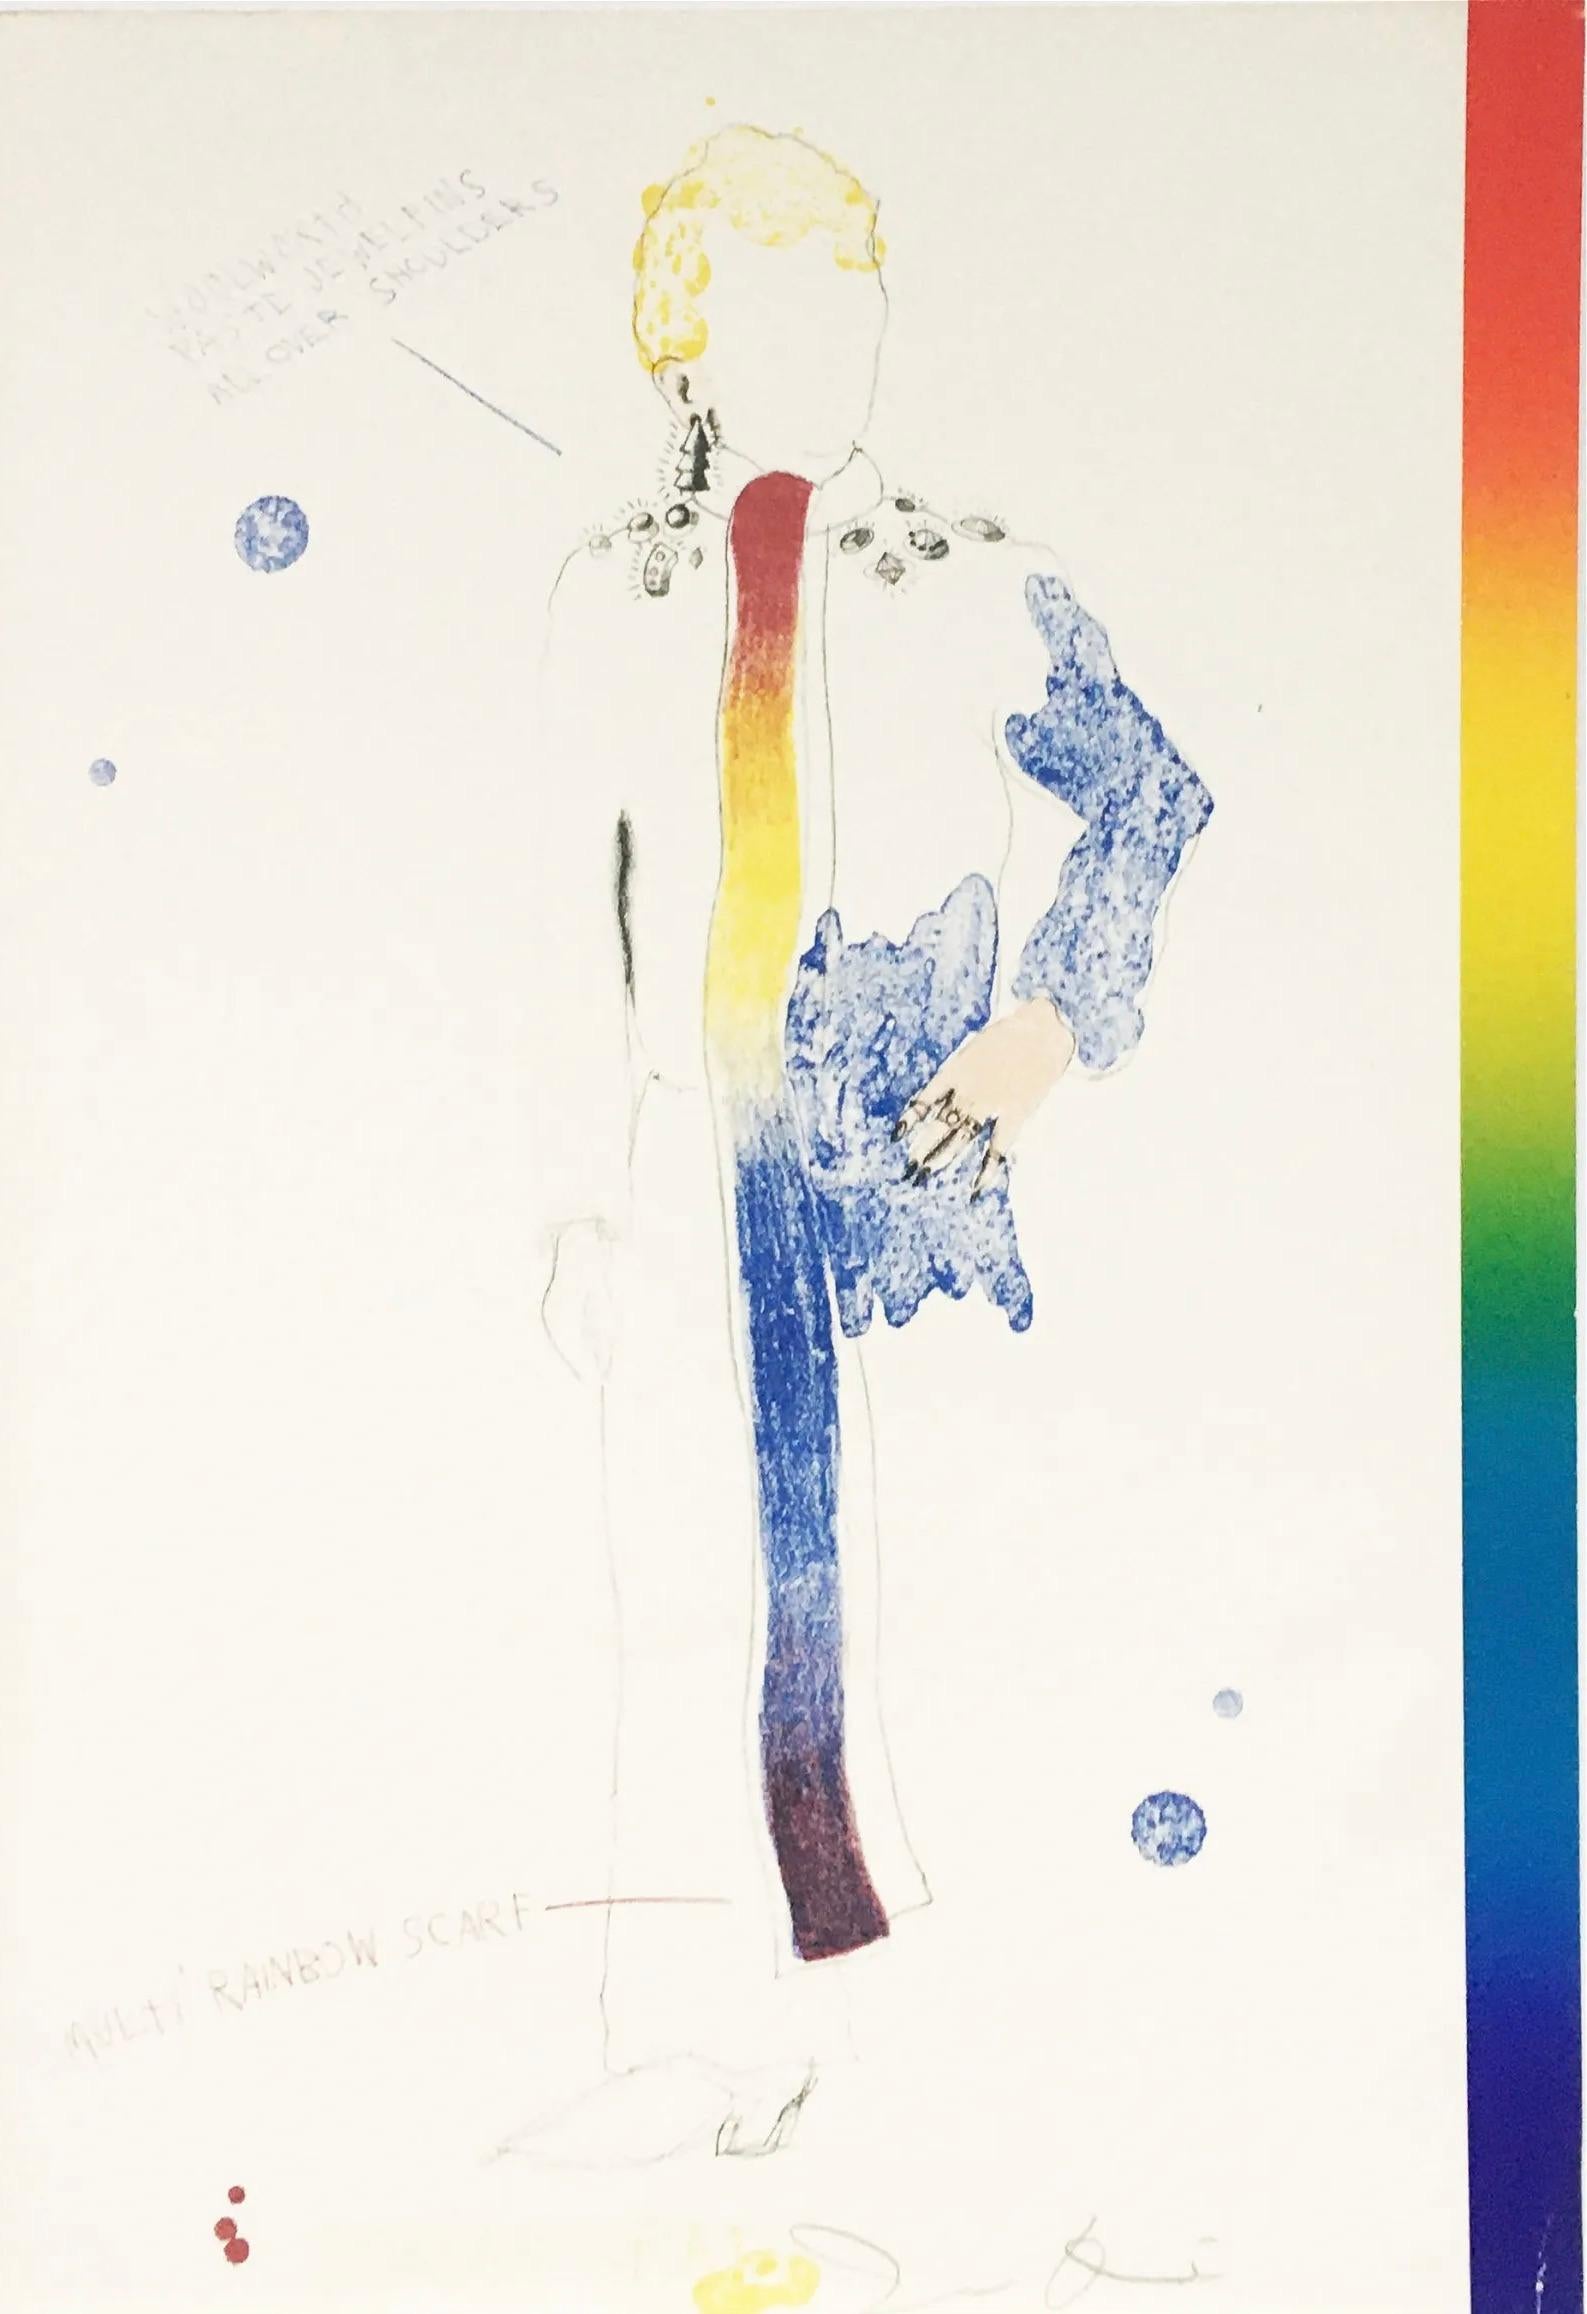 Dorian Gray in Multi Rainbow Scarf - Print by Jim Dine